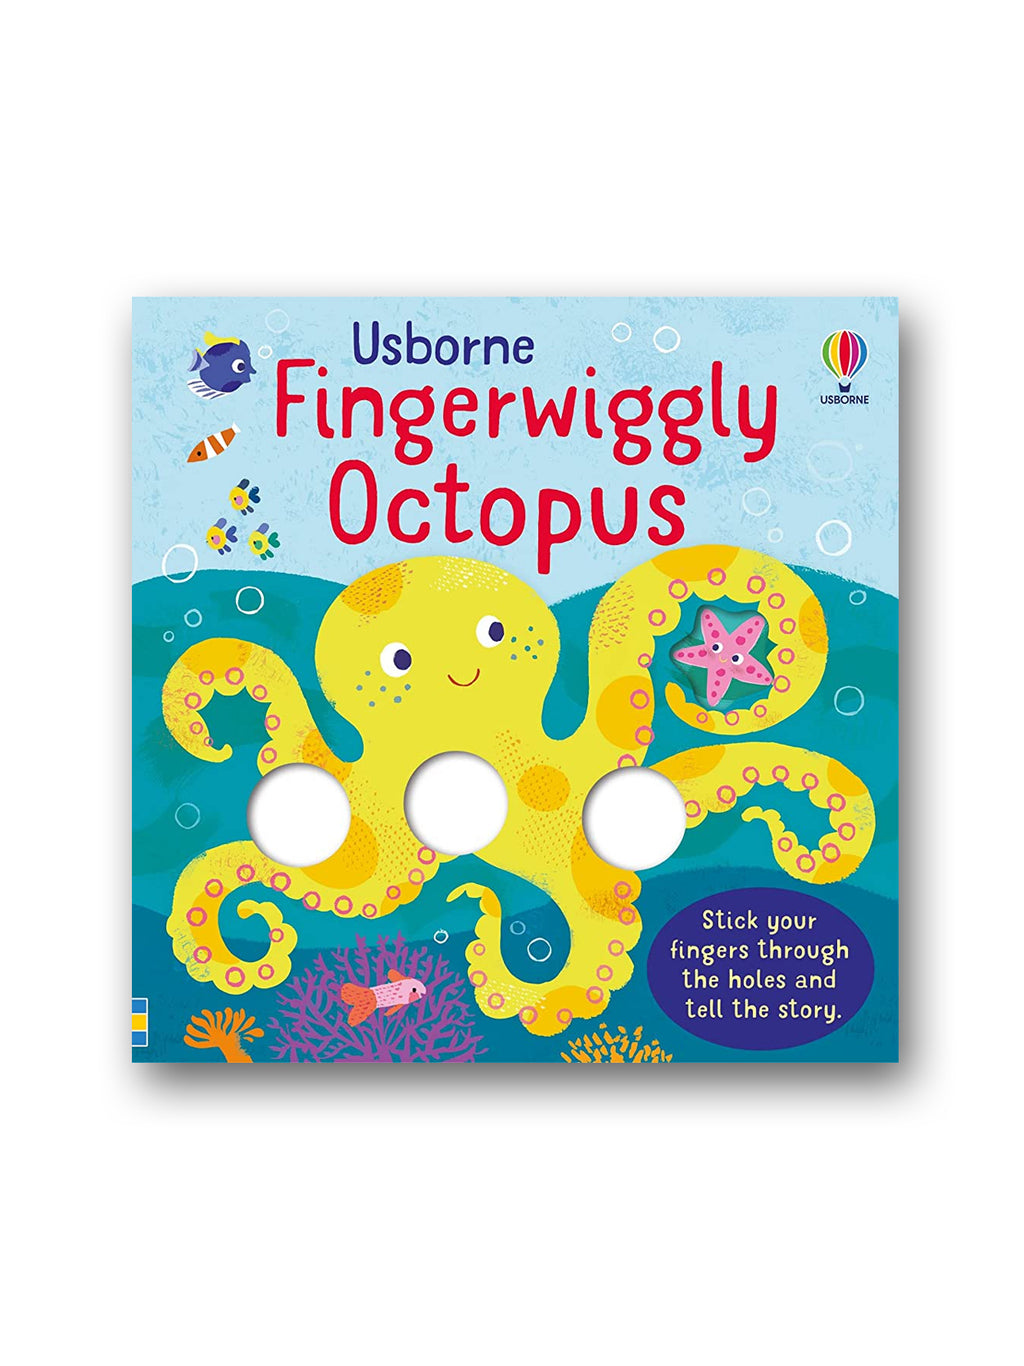 Fingerwiggly Octopus